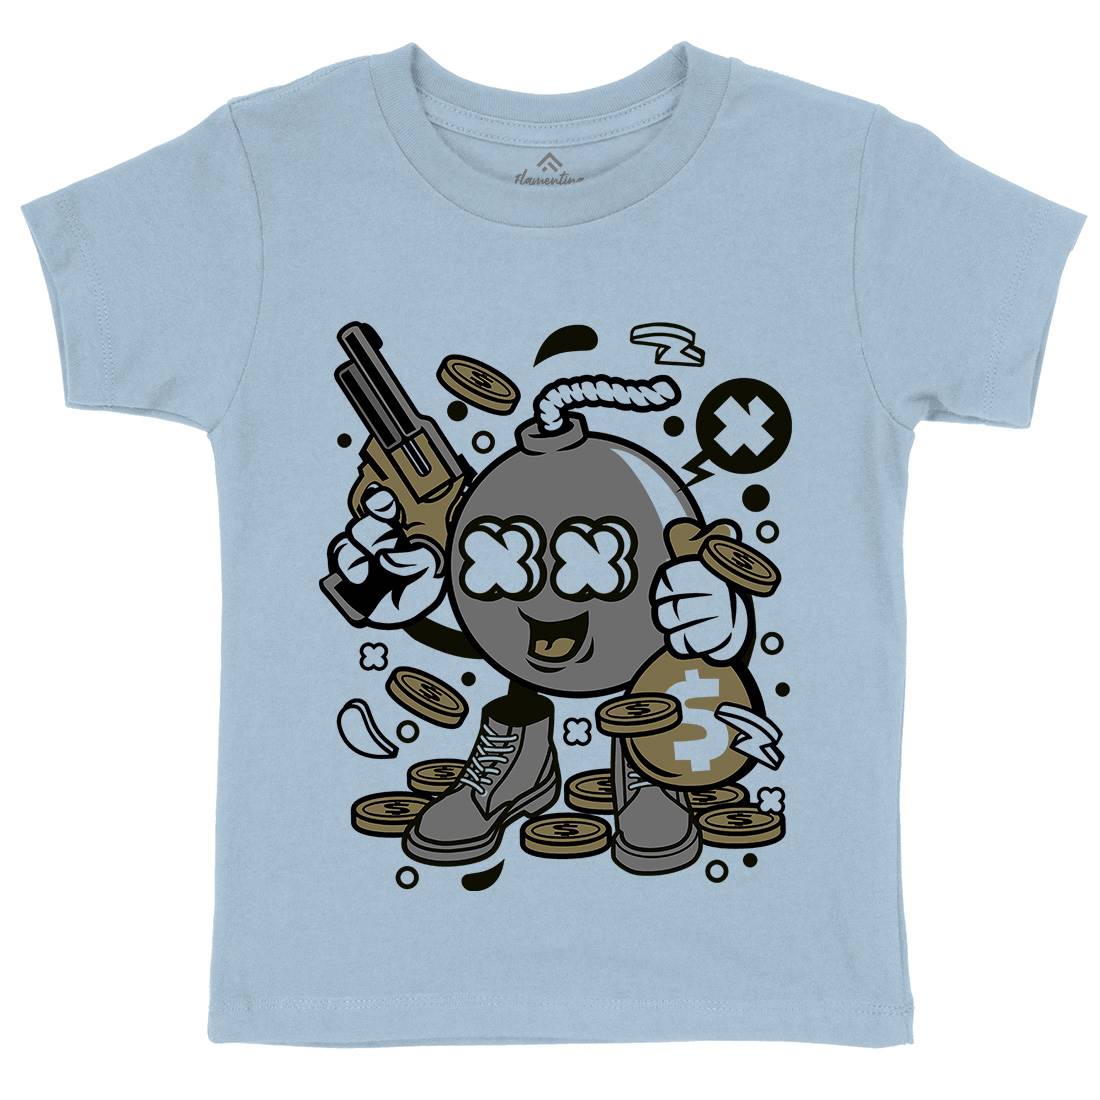 Money Takers Bomb Kids Crew Neck T-Shirt Retro C173